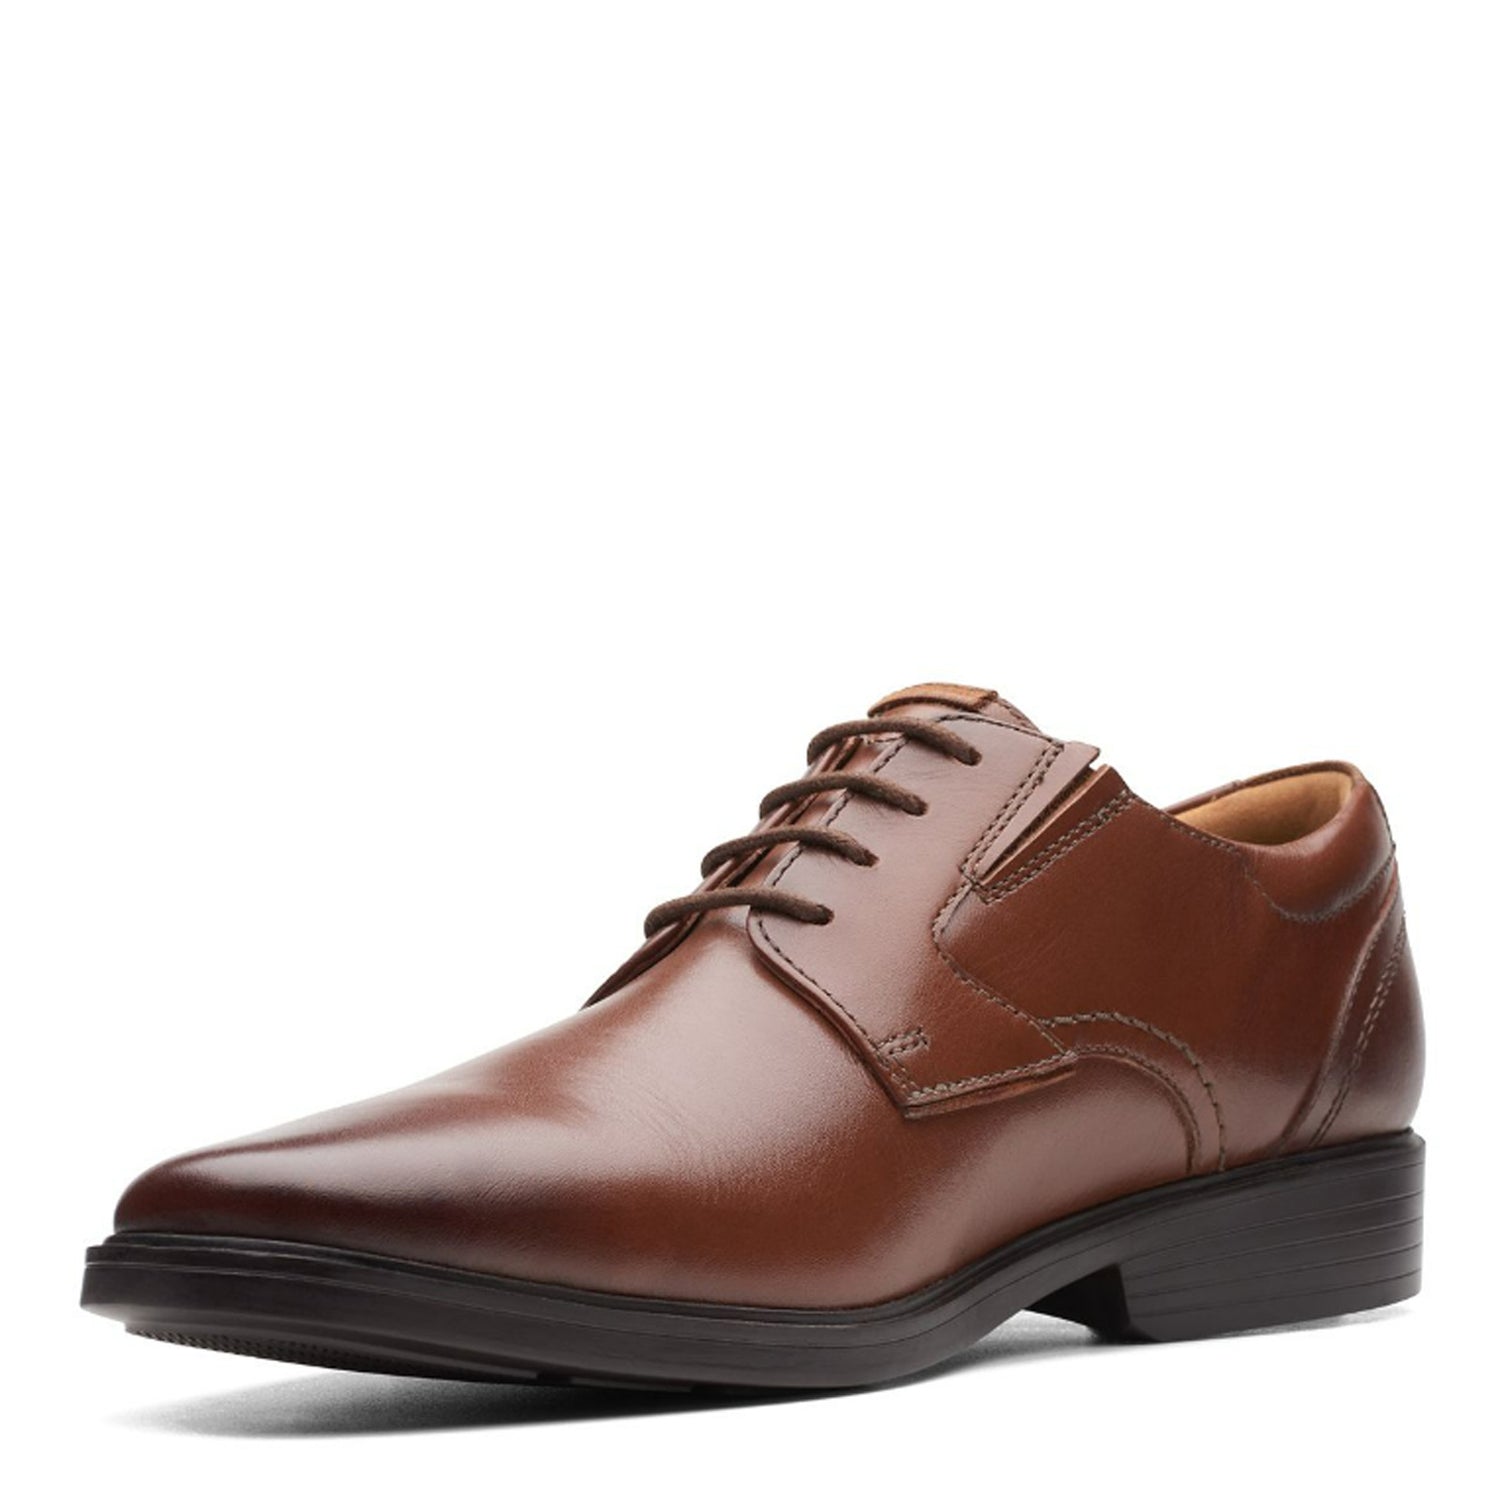 Peltz Shoes  Men's Clarks Clarkslite Low Oxford TAN 26167571